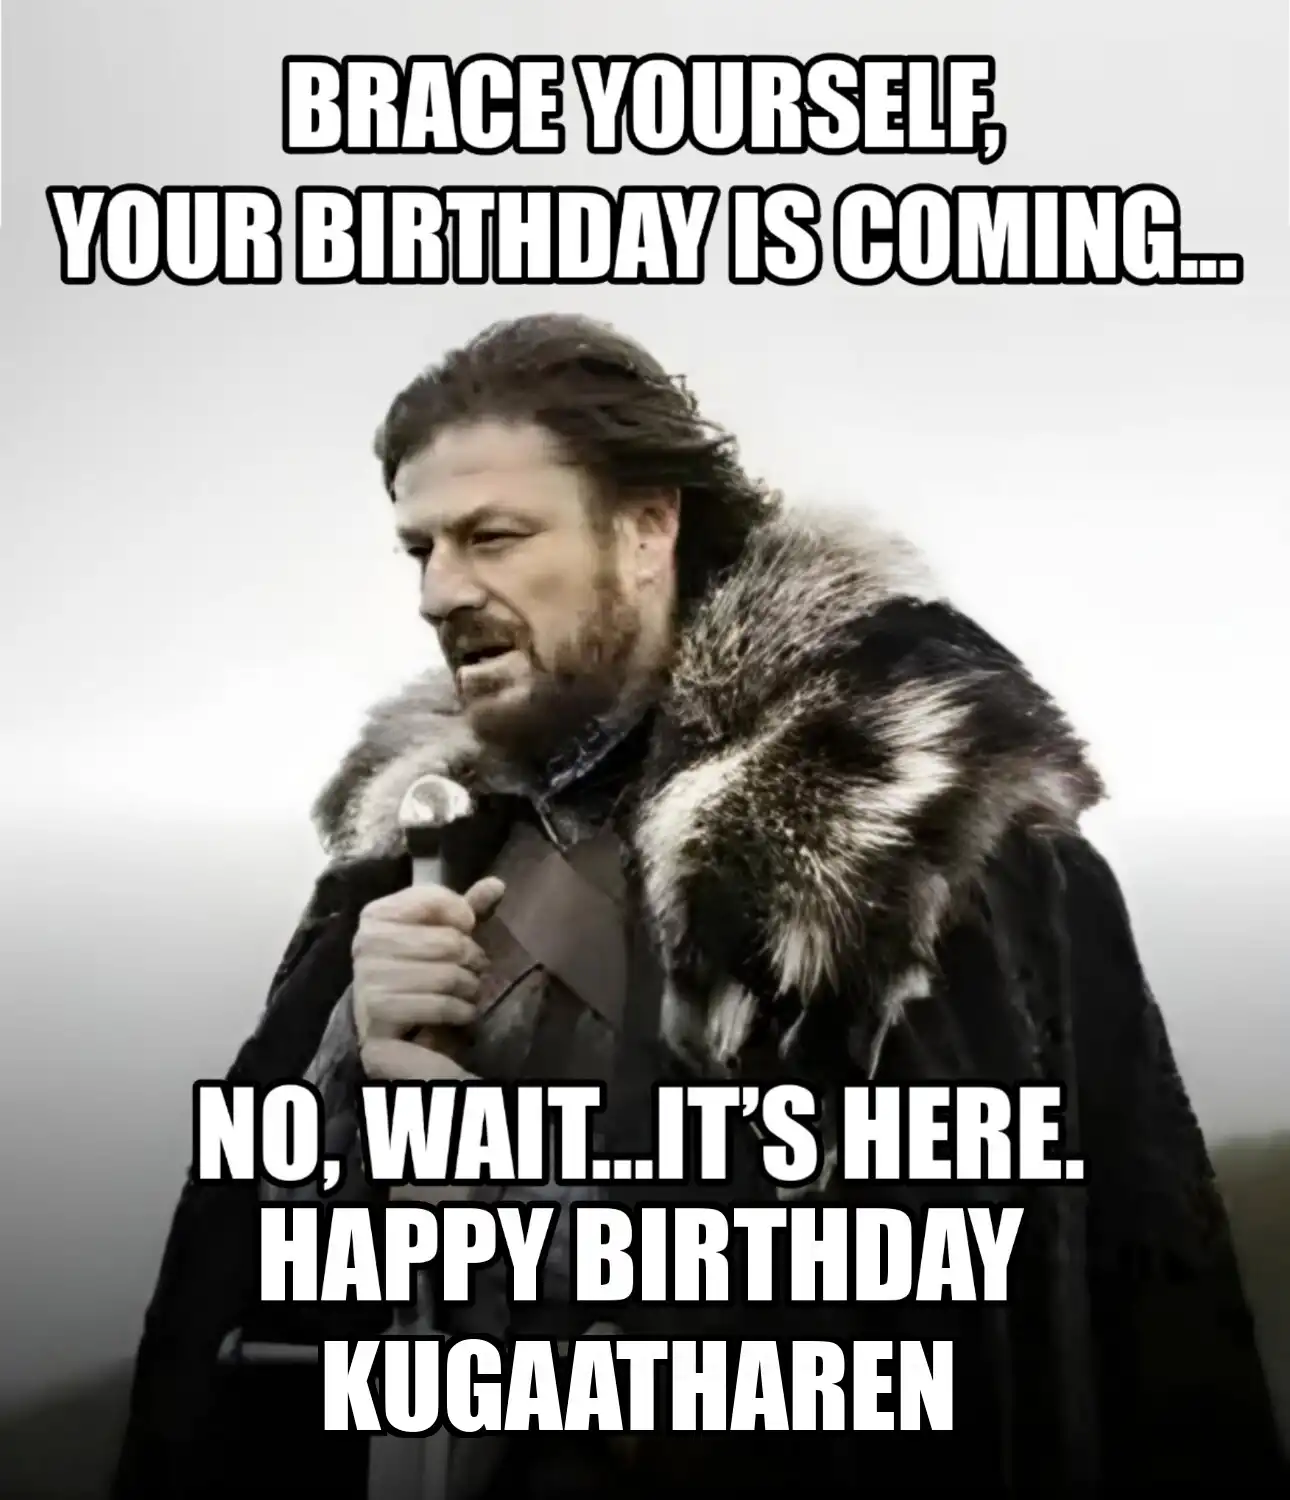 Happy Birthday Kugaatharen Brace Yourself Your Birthday Is Coming Meme